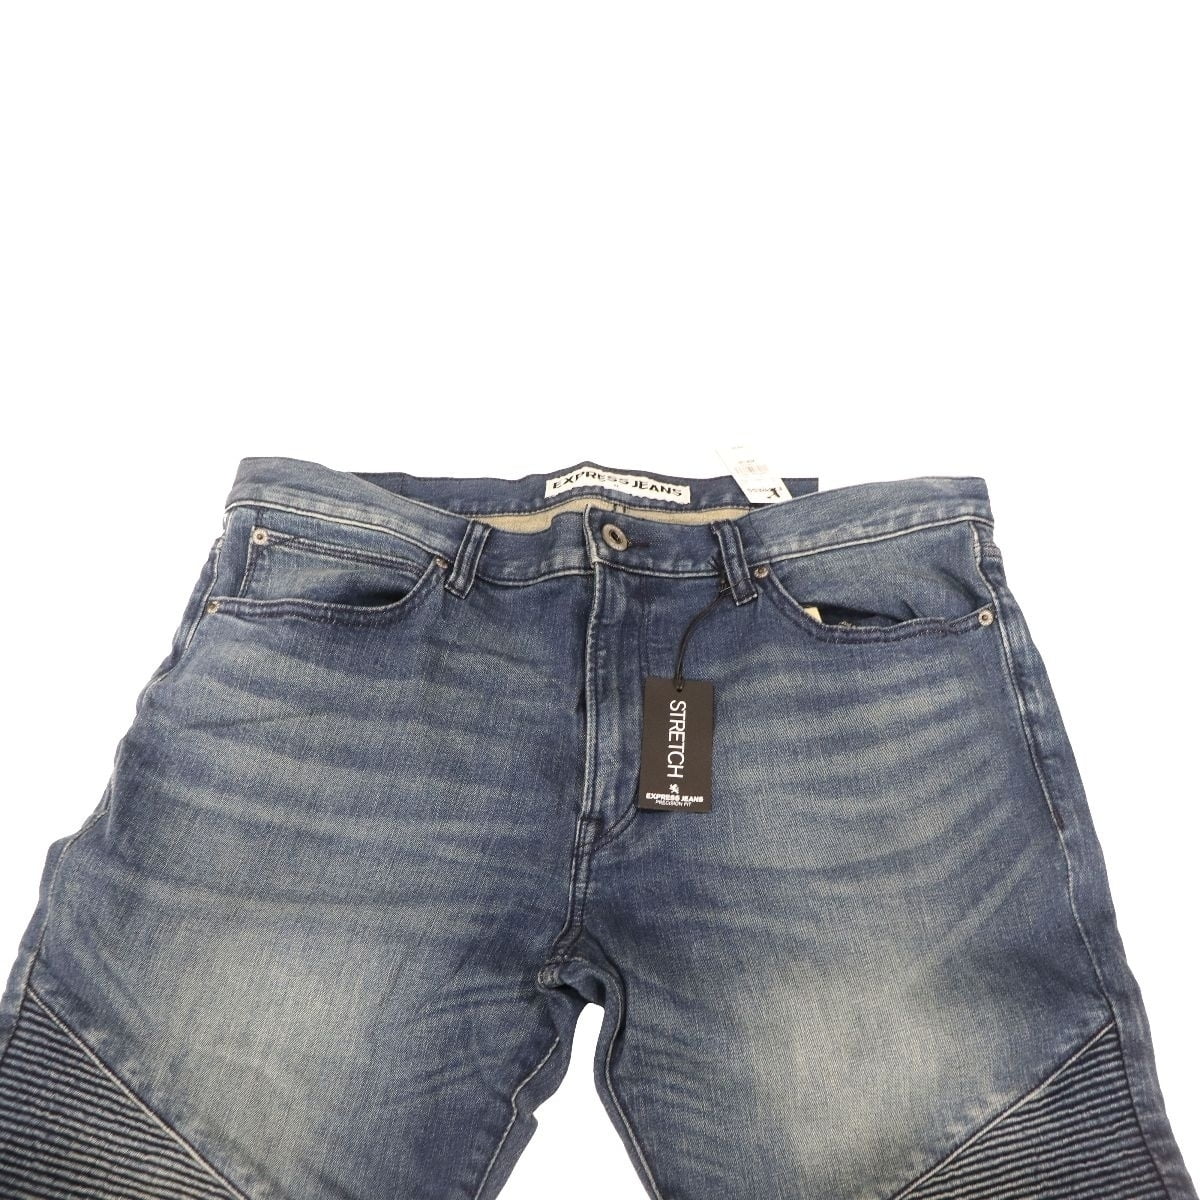 Express Jeans Mens Rocco Slim Skinny / Stretch (W36 x L32) - Demin Blue - Walmart.com